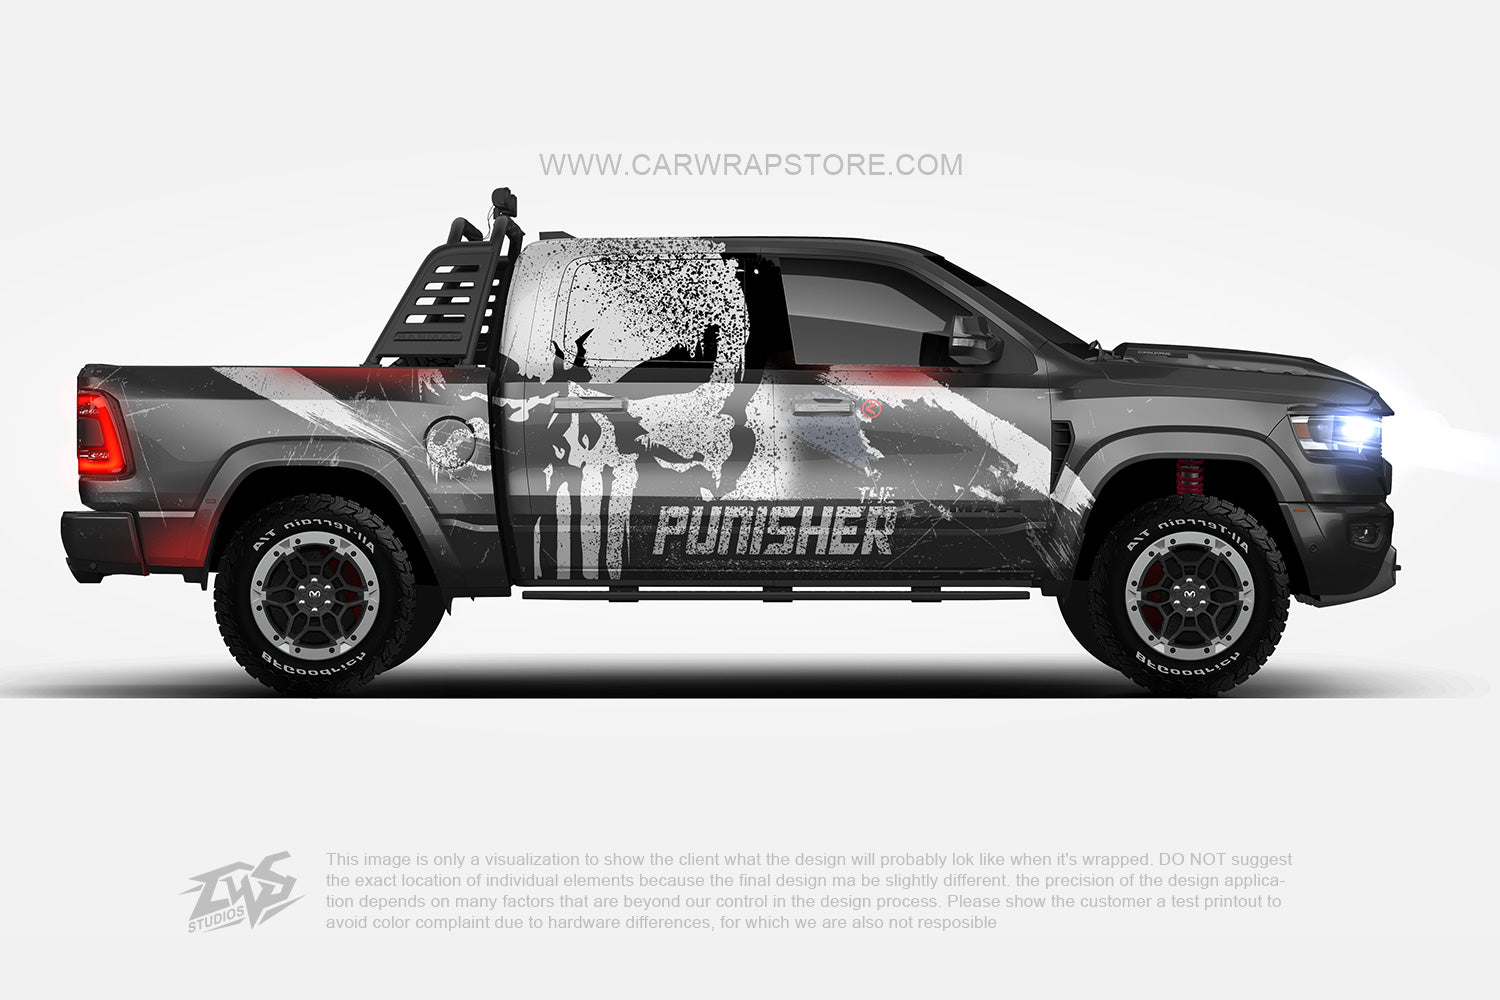 Punisher【PN-01】 - Car Wrap Store